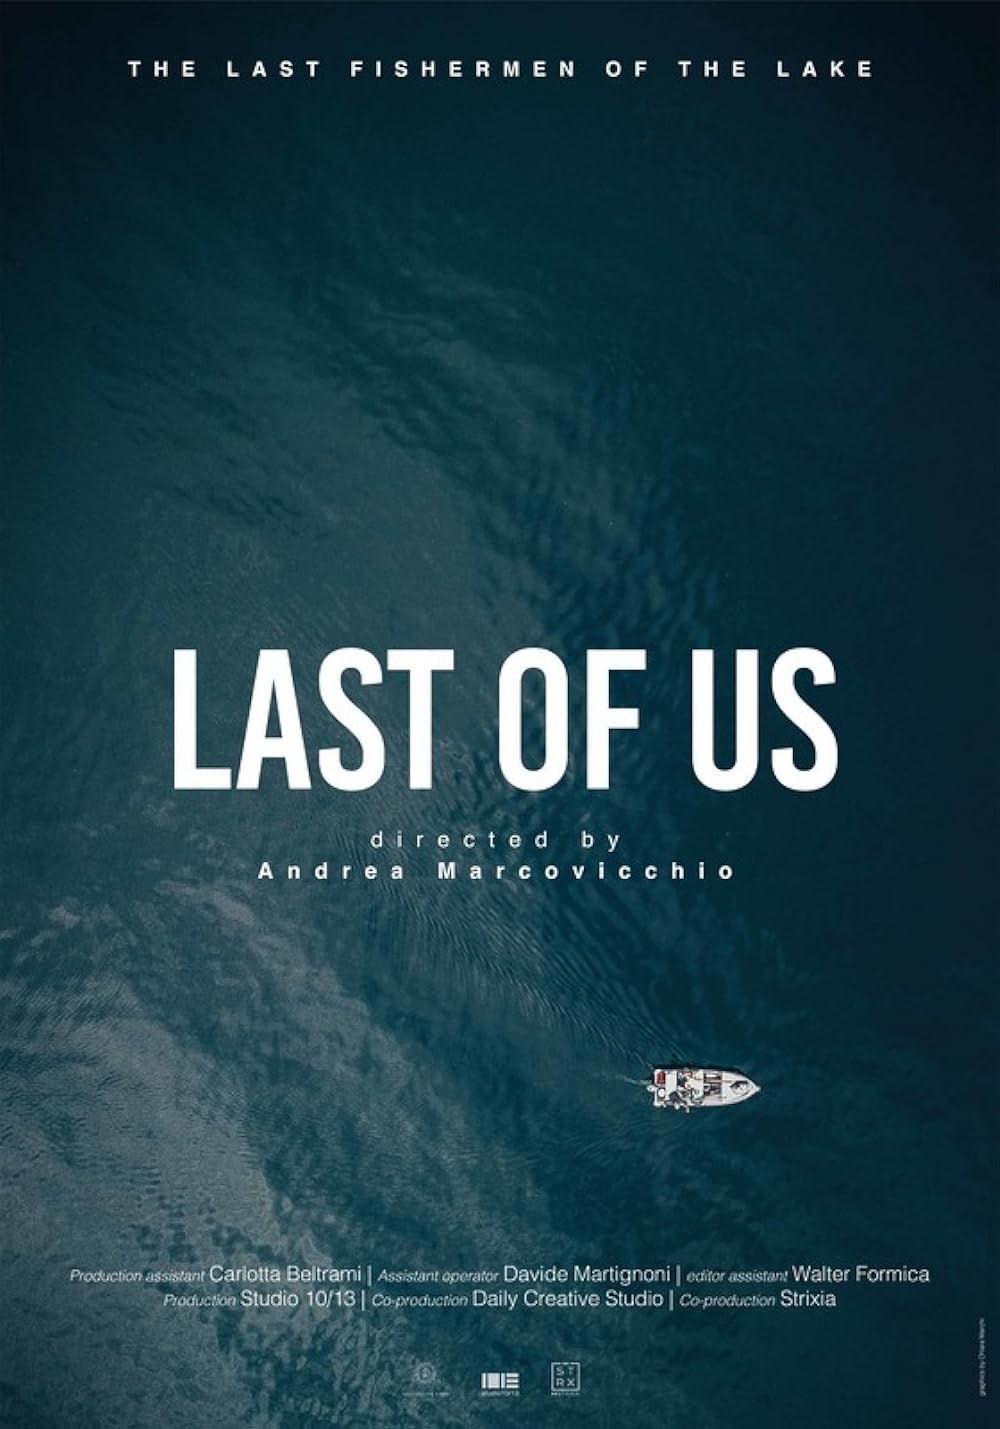 Last of Us: The Last Fishermen of the Lake